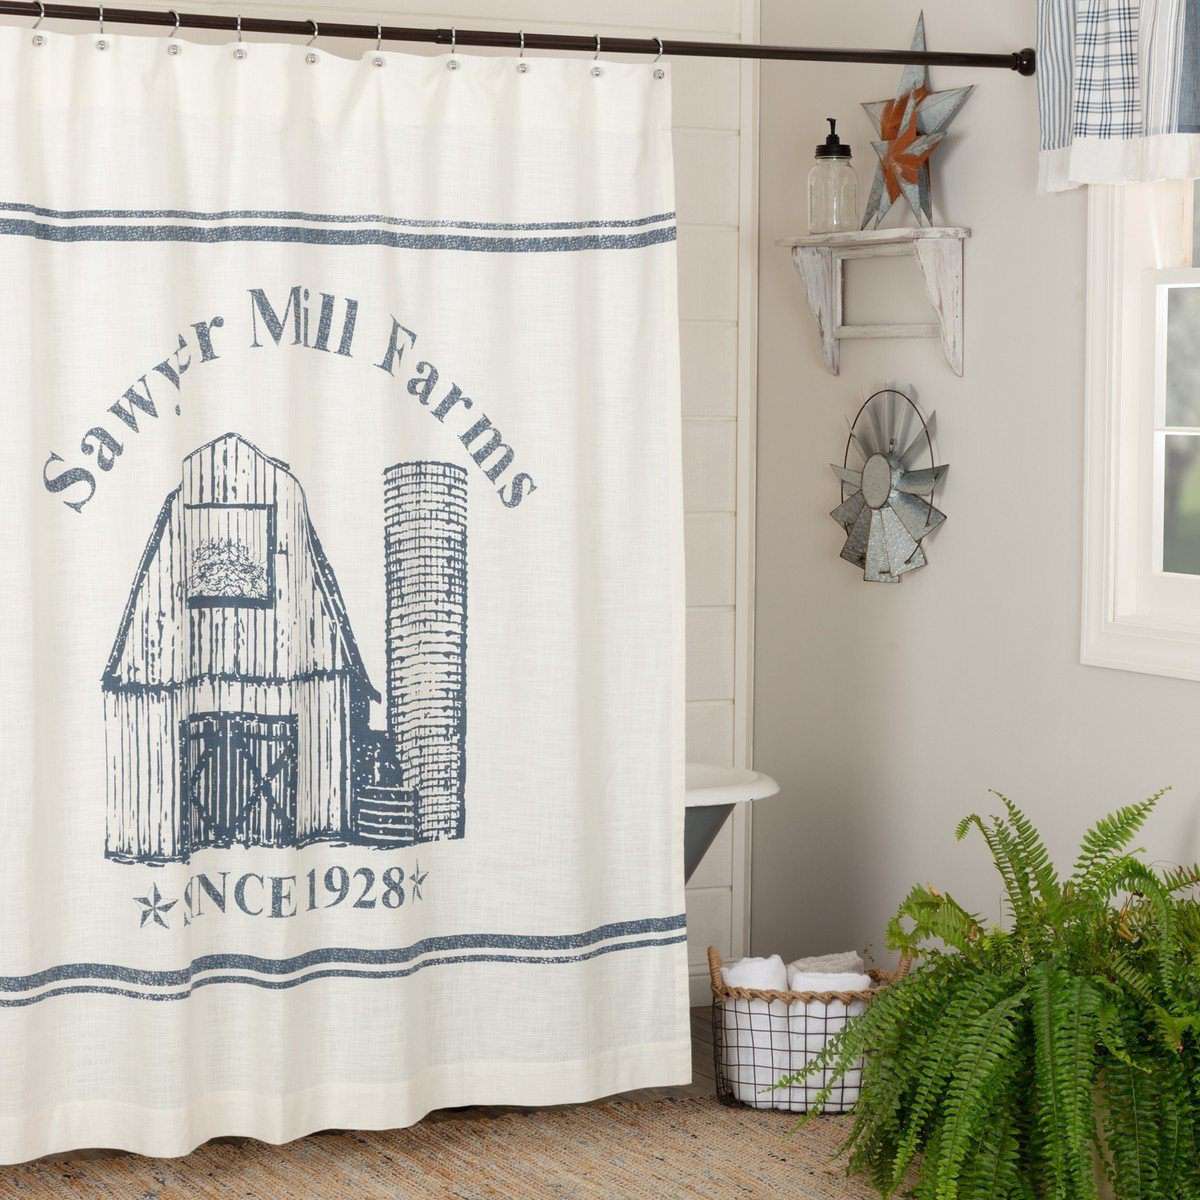 Sawyer Mill Blue Barn Shower Curtain 72"x72" curtain VHC Brands 